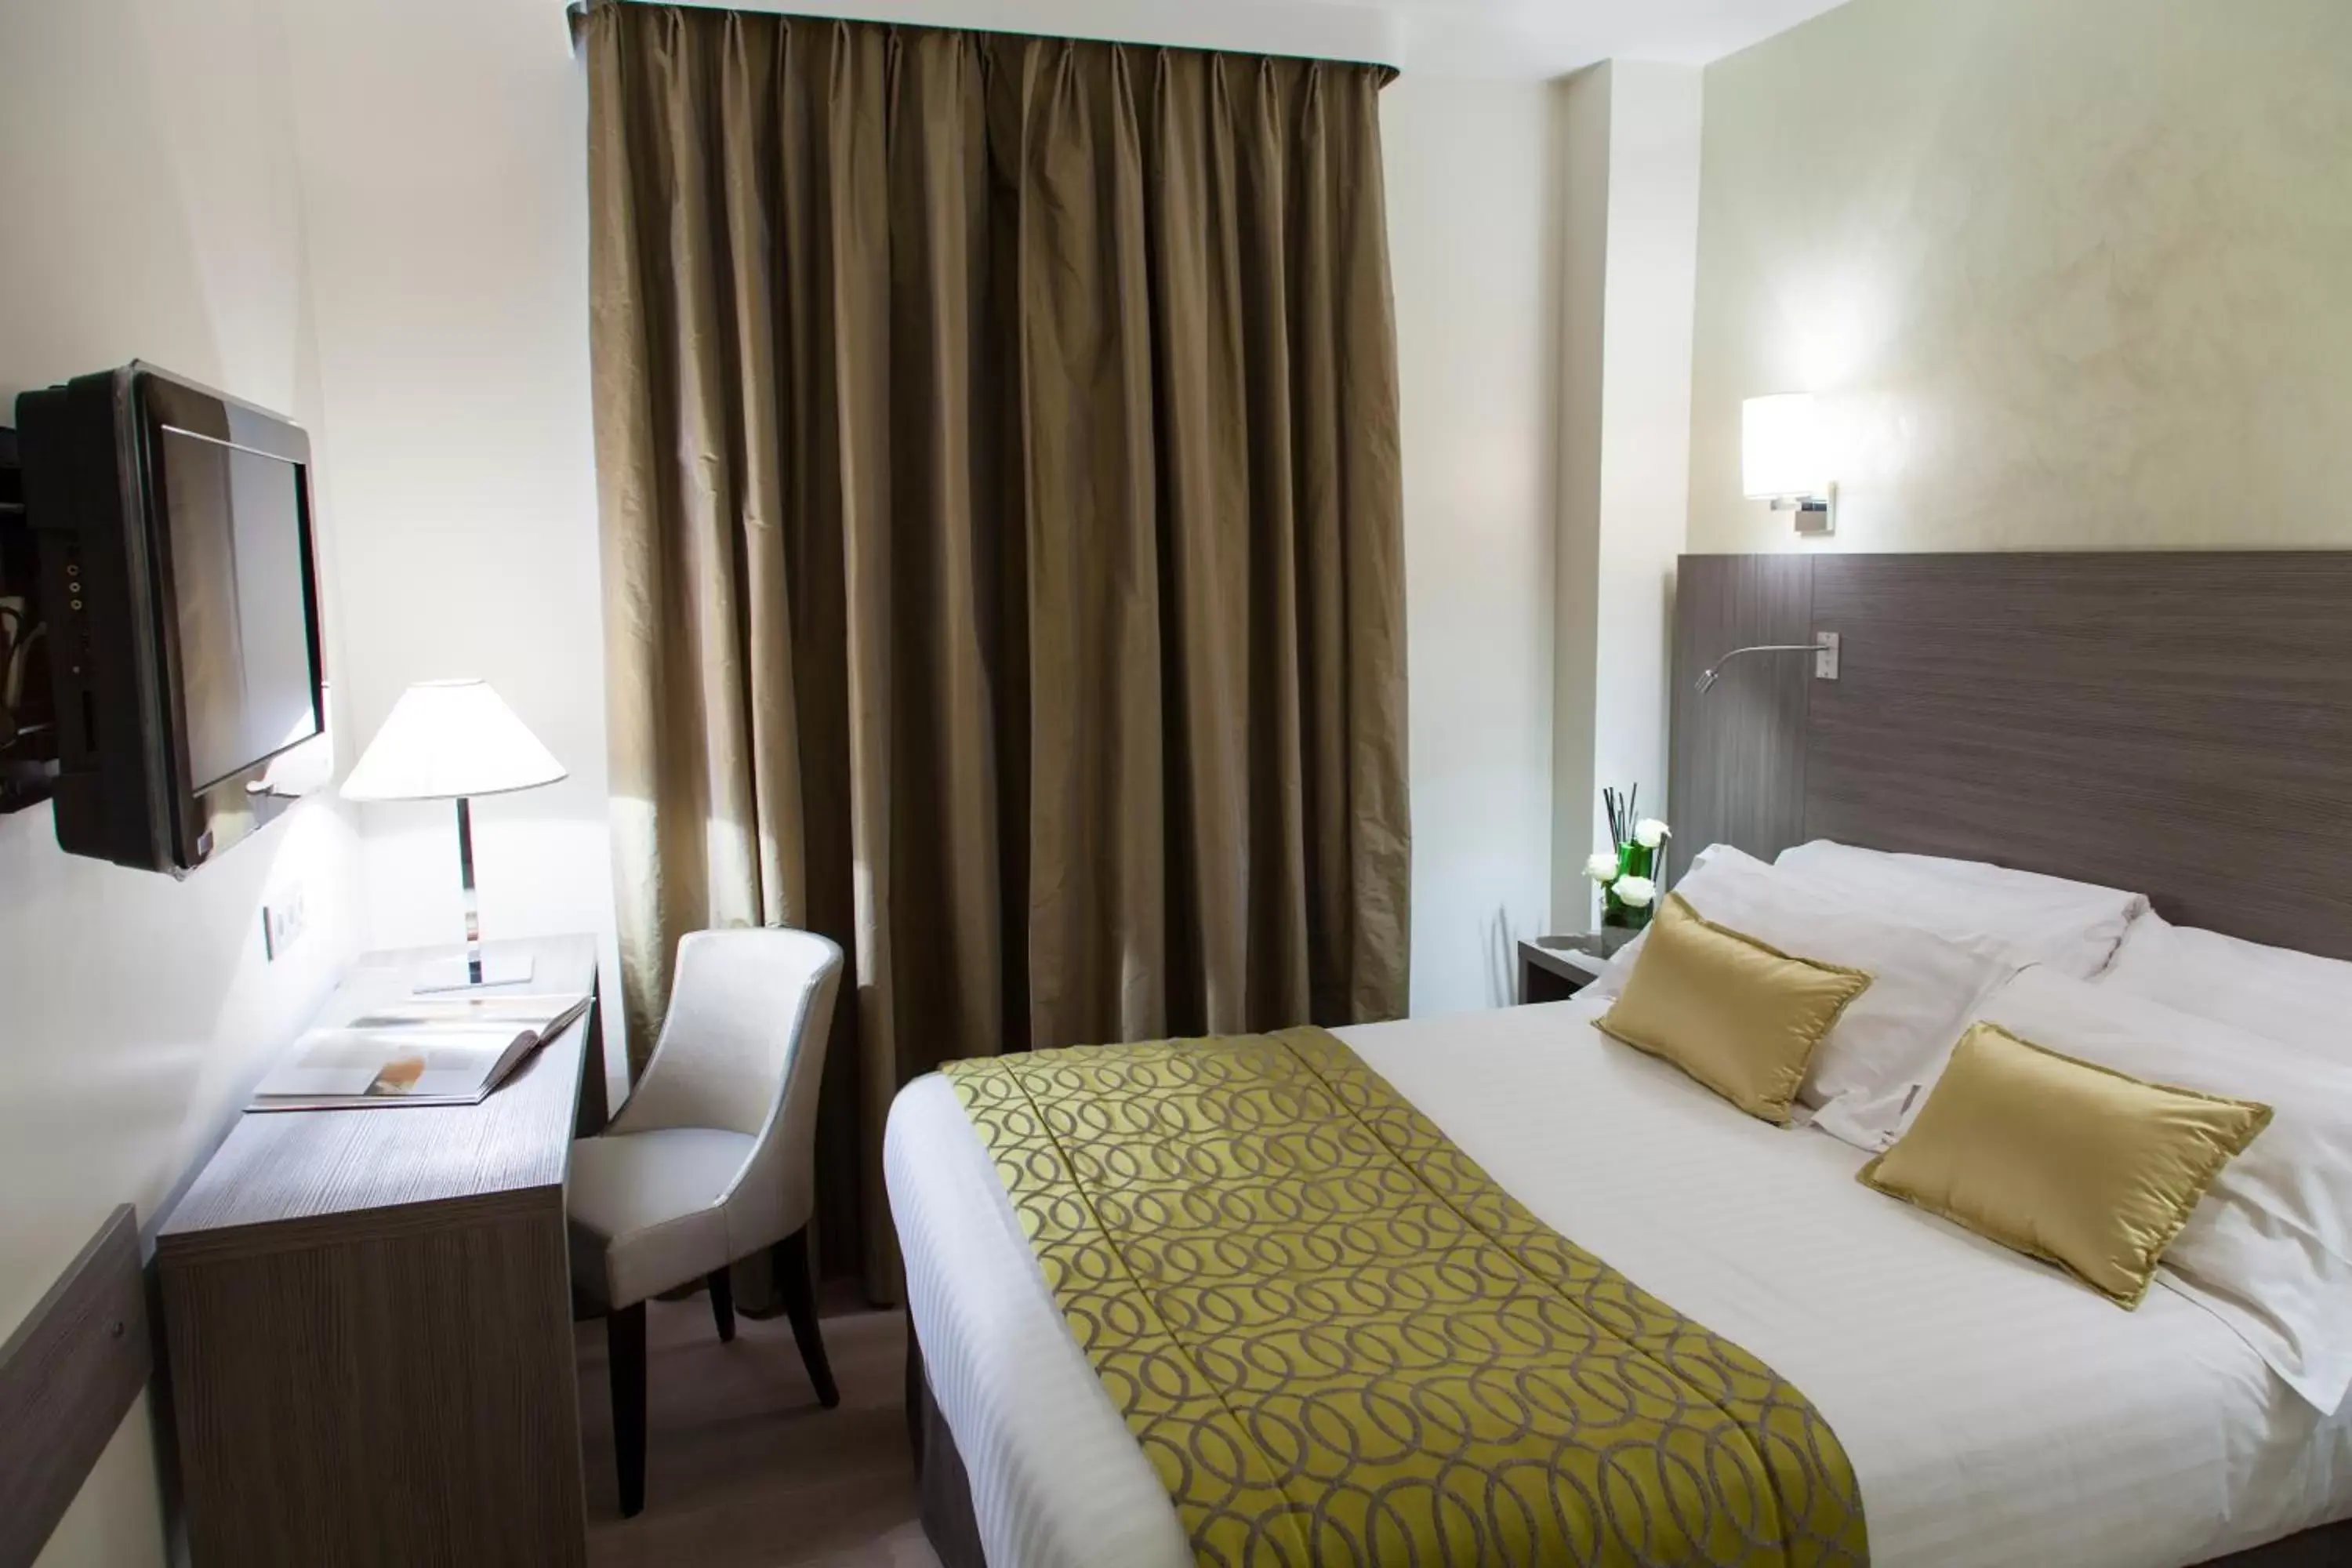 Bedroom, Bed in Best Western Plus Hotel Carlton Annecy